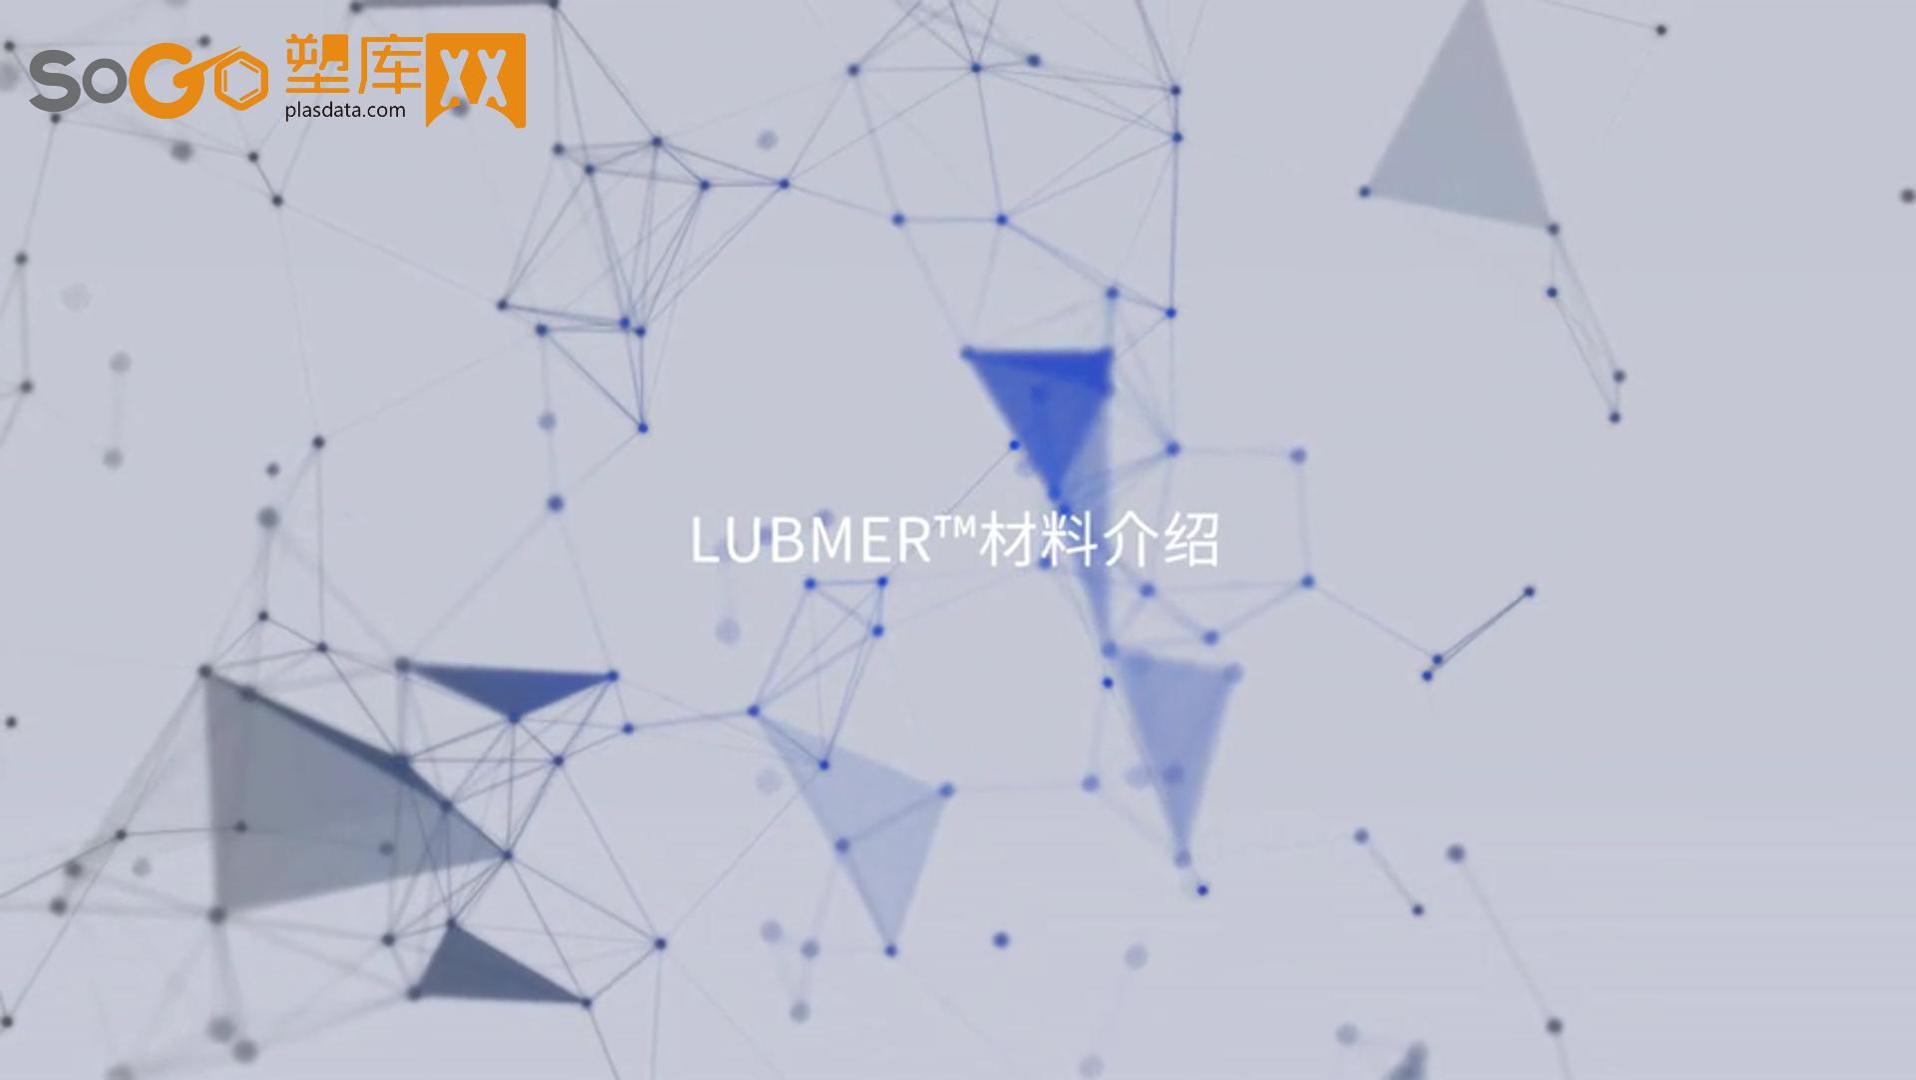 UHMW-PE-LUBMER -三井化学